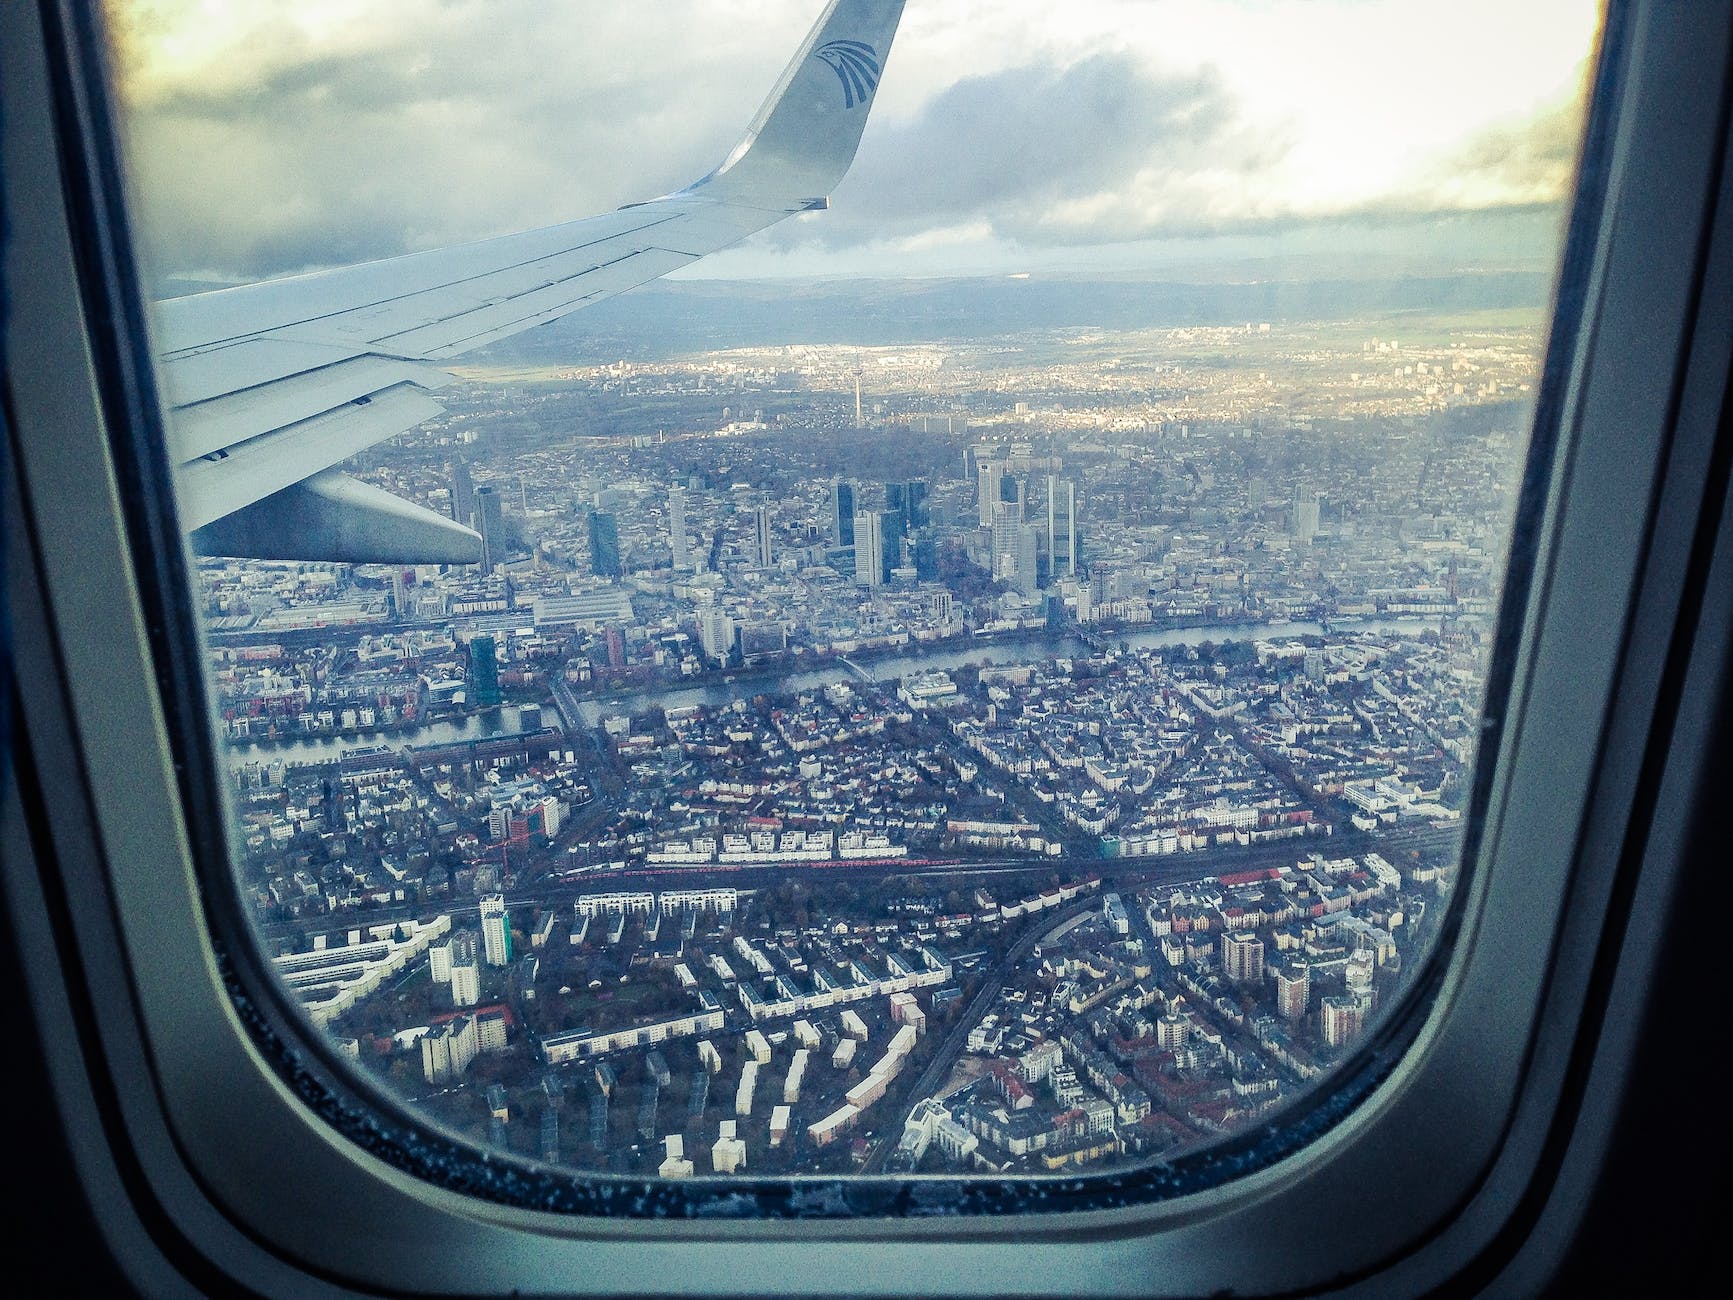 airplane windowpane showing city buildings